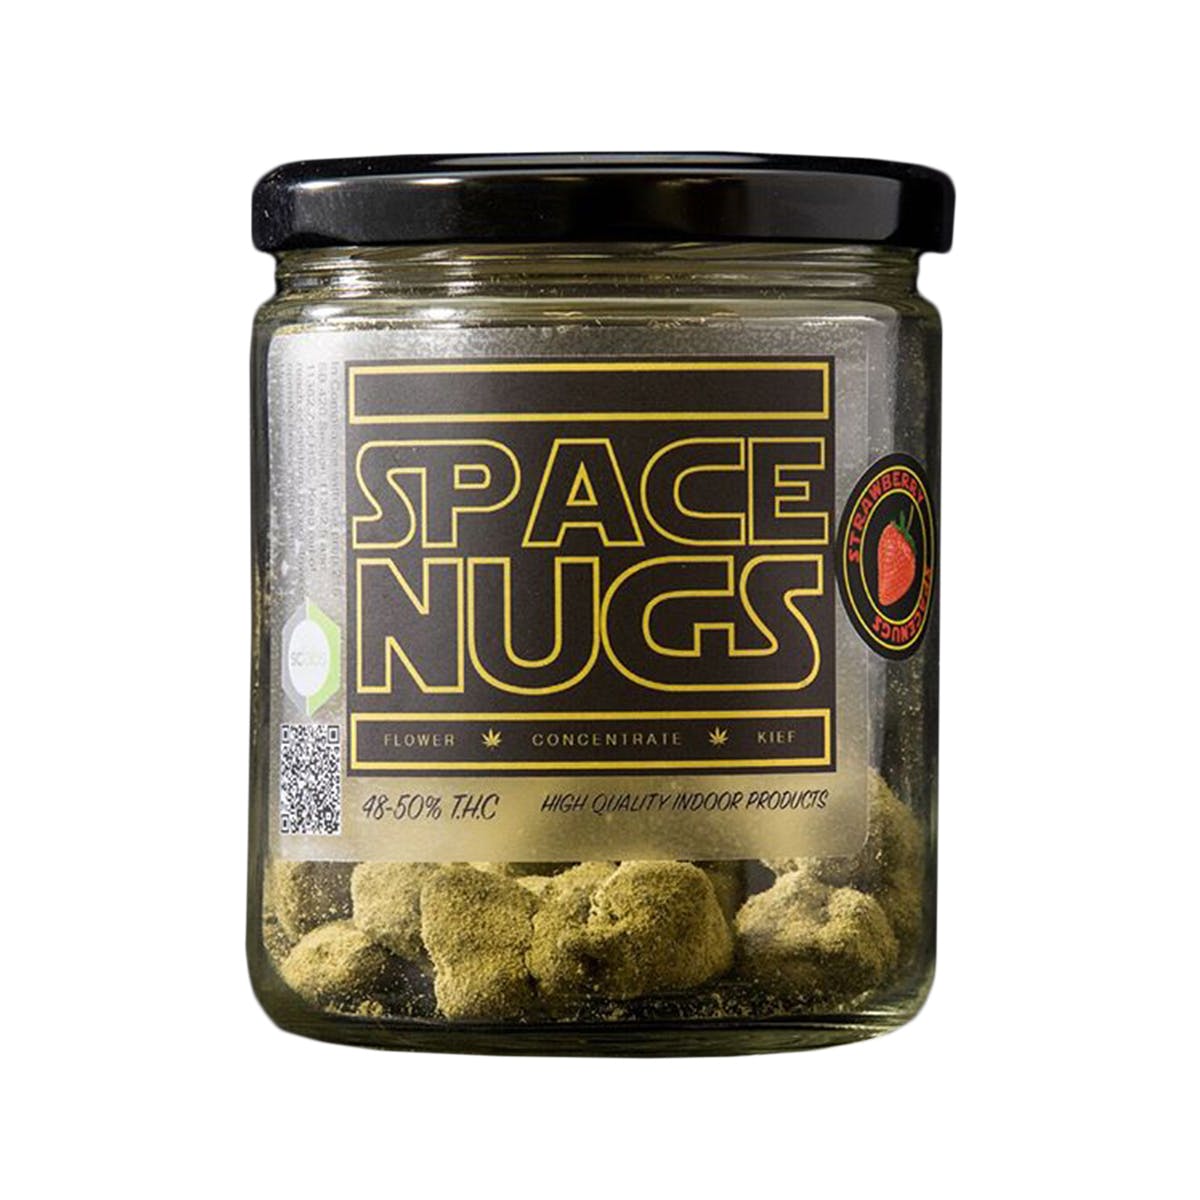 marijuana-dispensaries-organic-solutions-whittier-in-whittier-strawberry-space-nugs